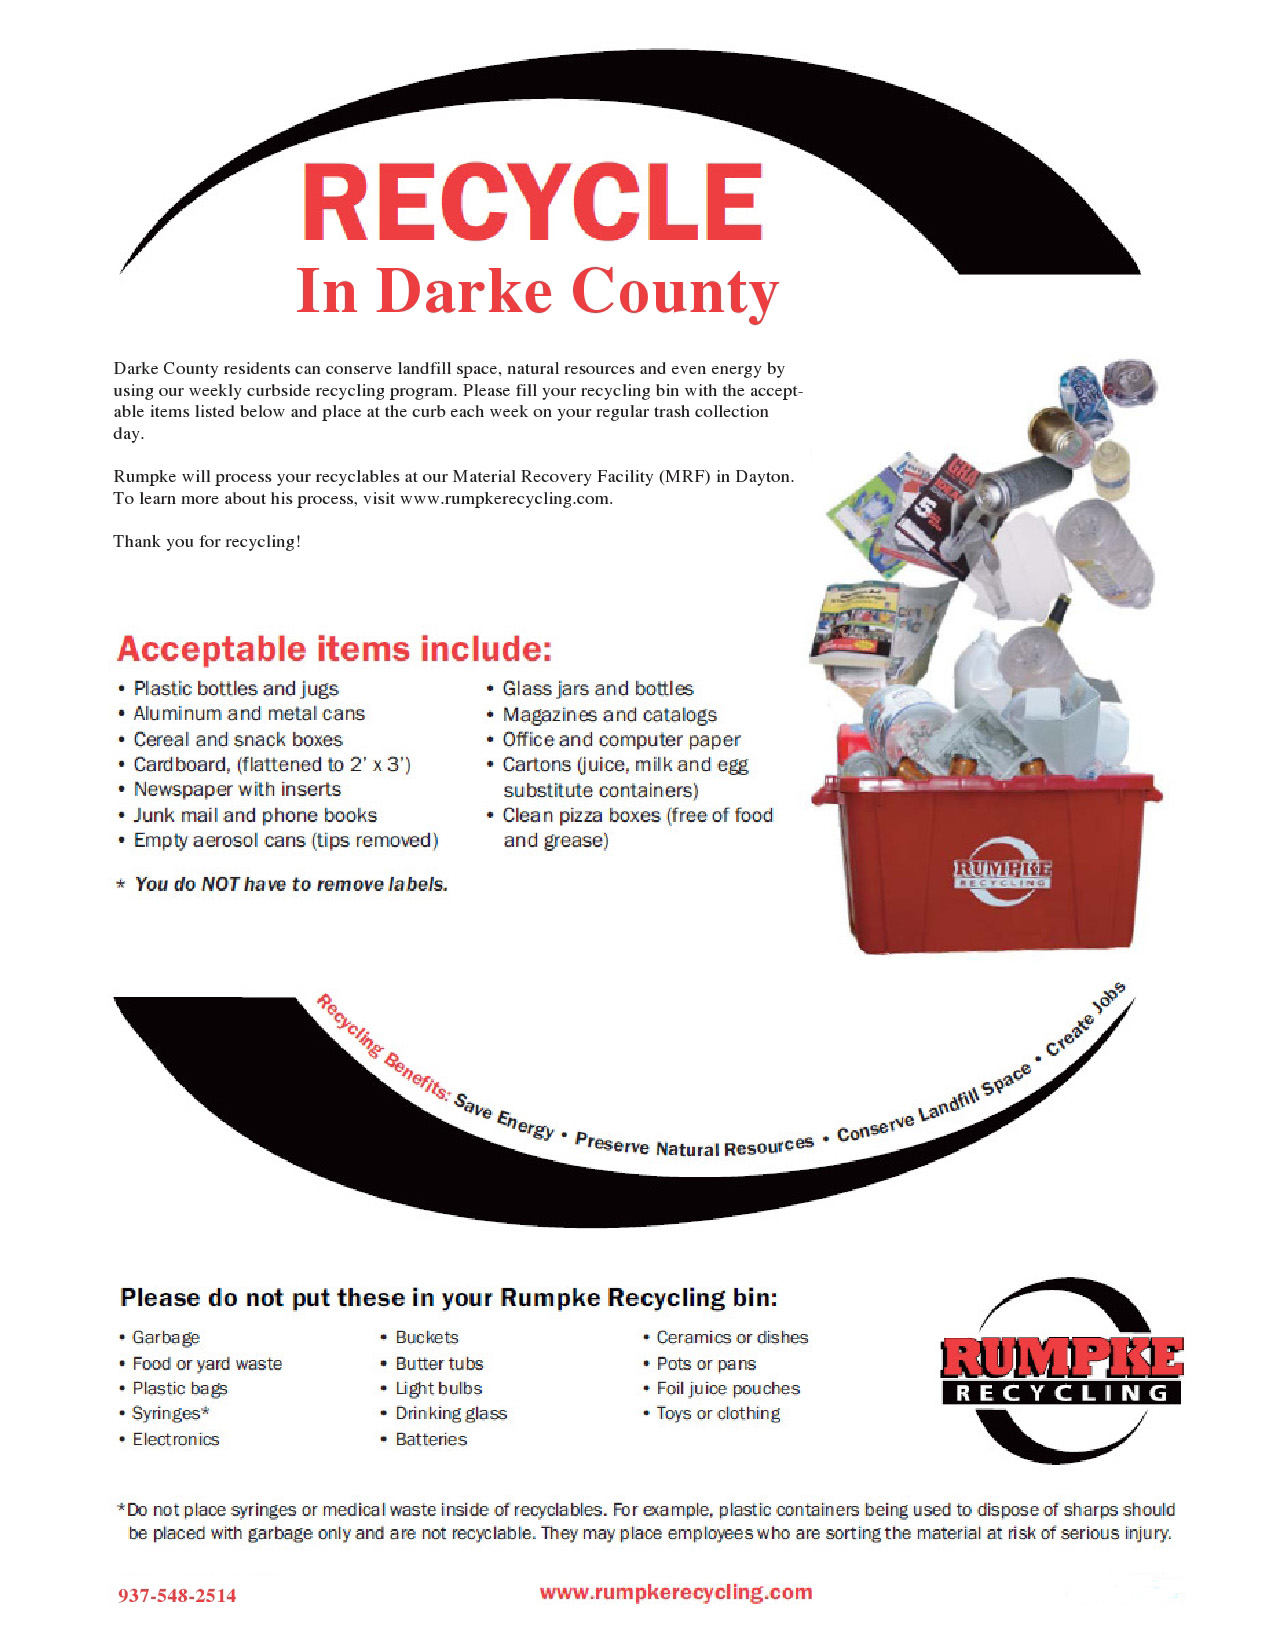 Recycling in Darke County